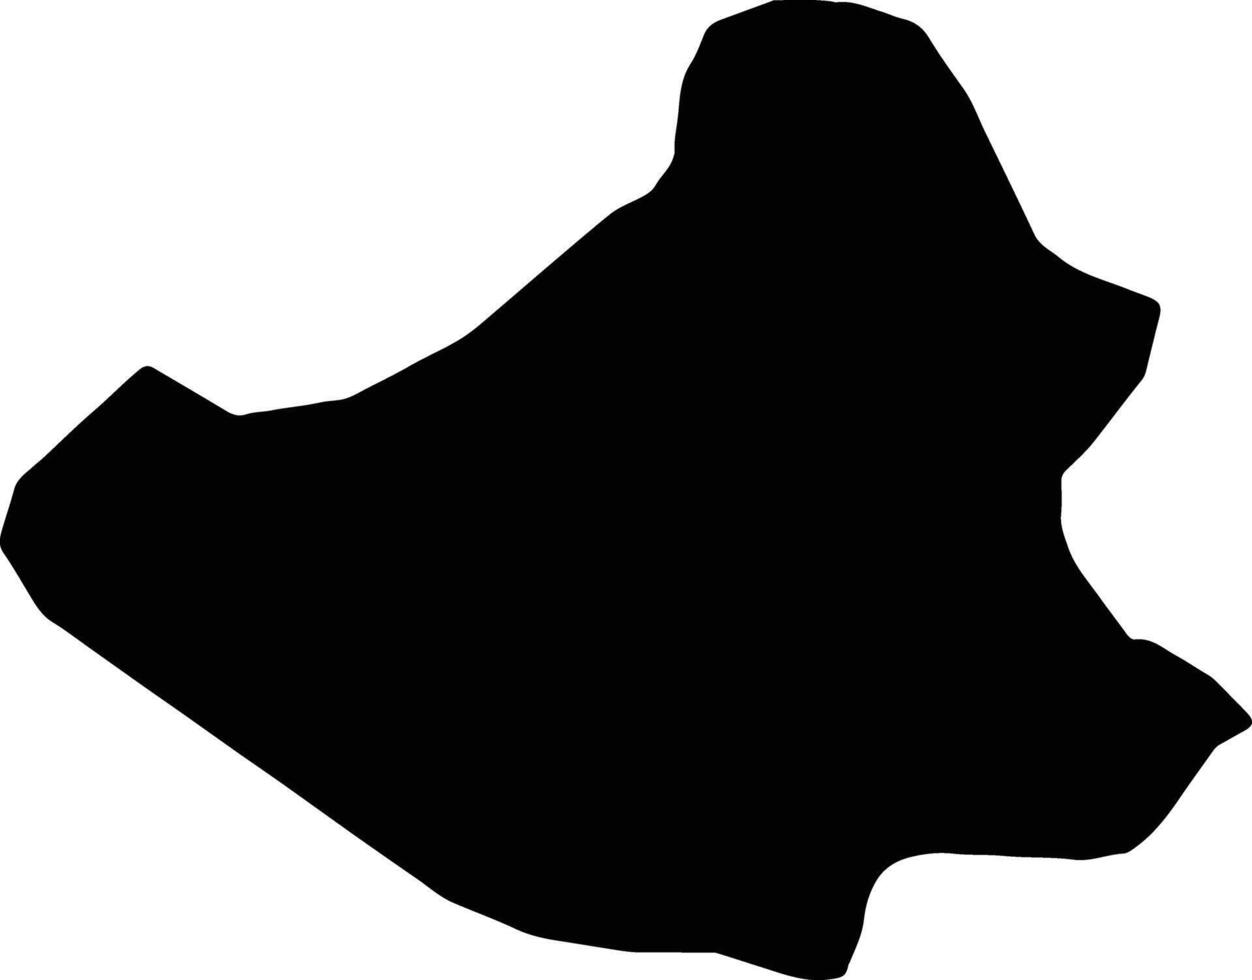 siquijor Filippine silhouette carta geografica vettore